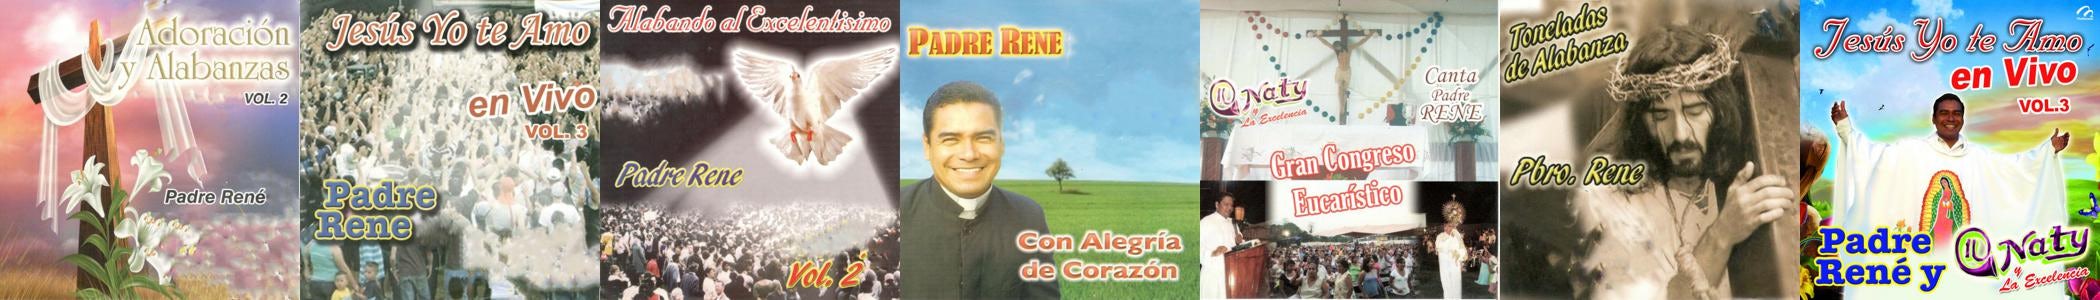 Padre Chelo Store: Official Merch & Vinyl